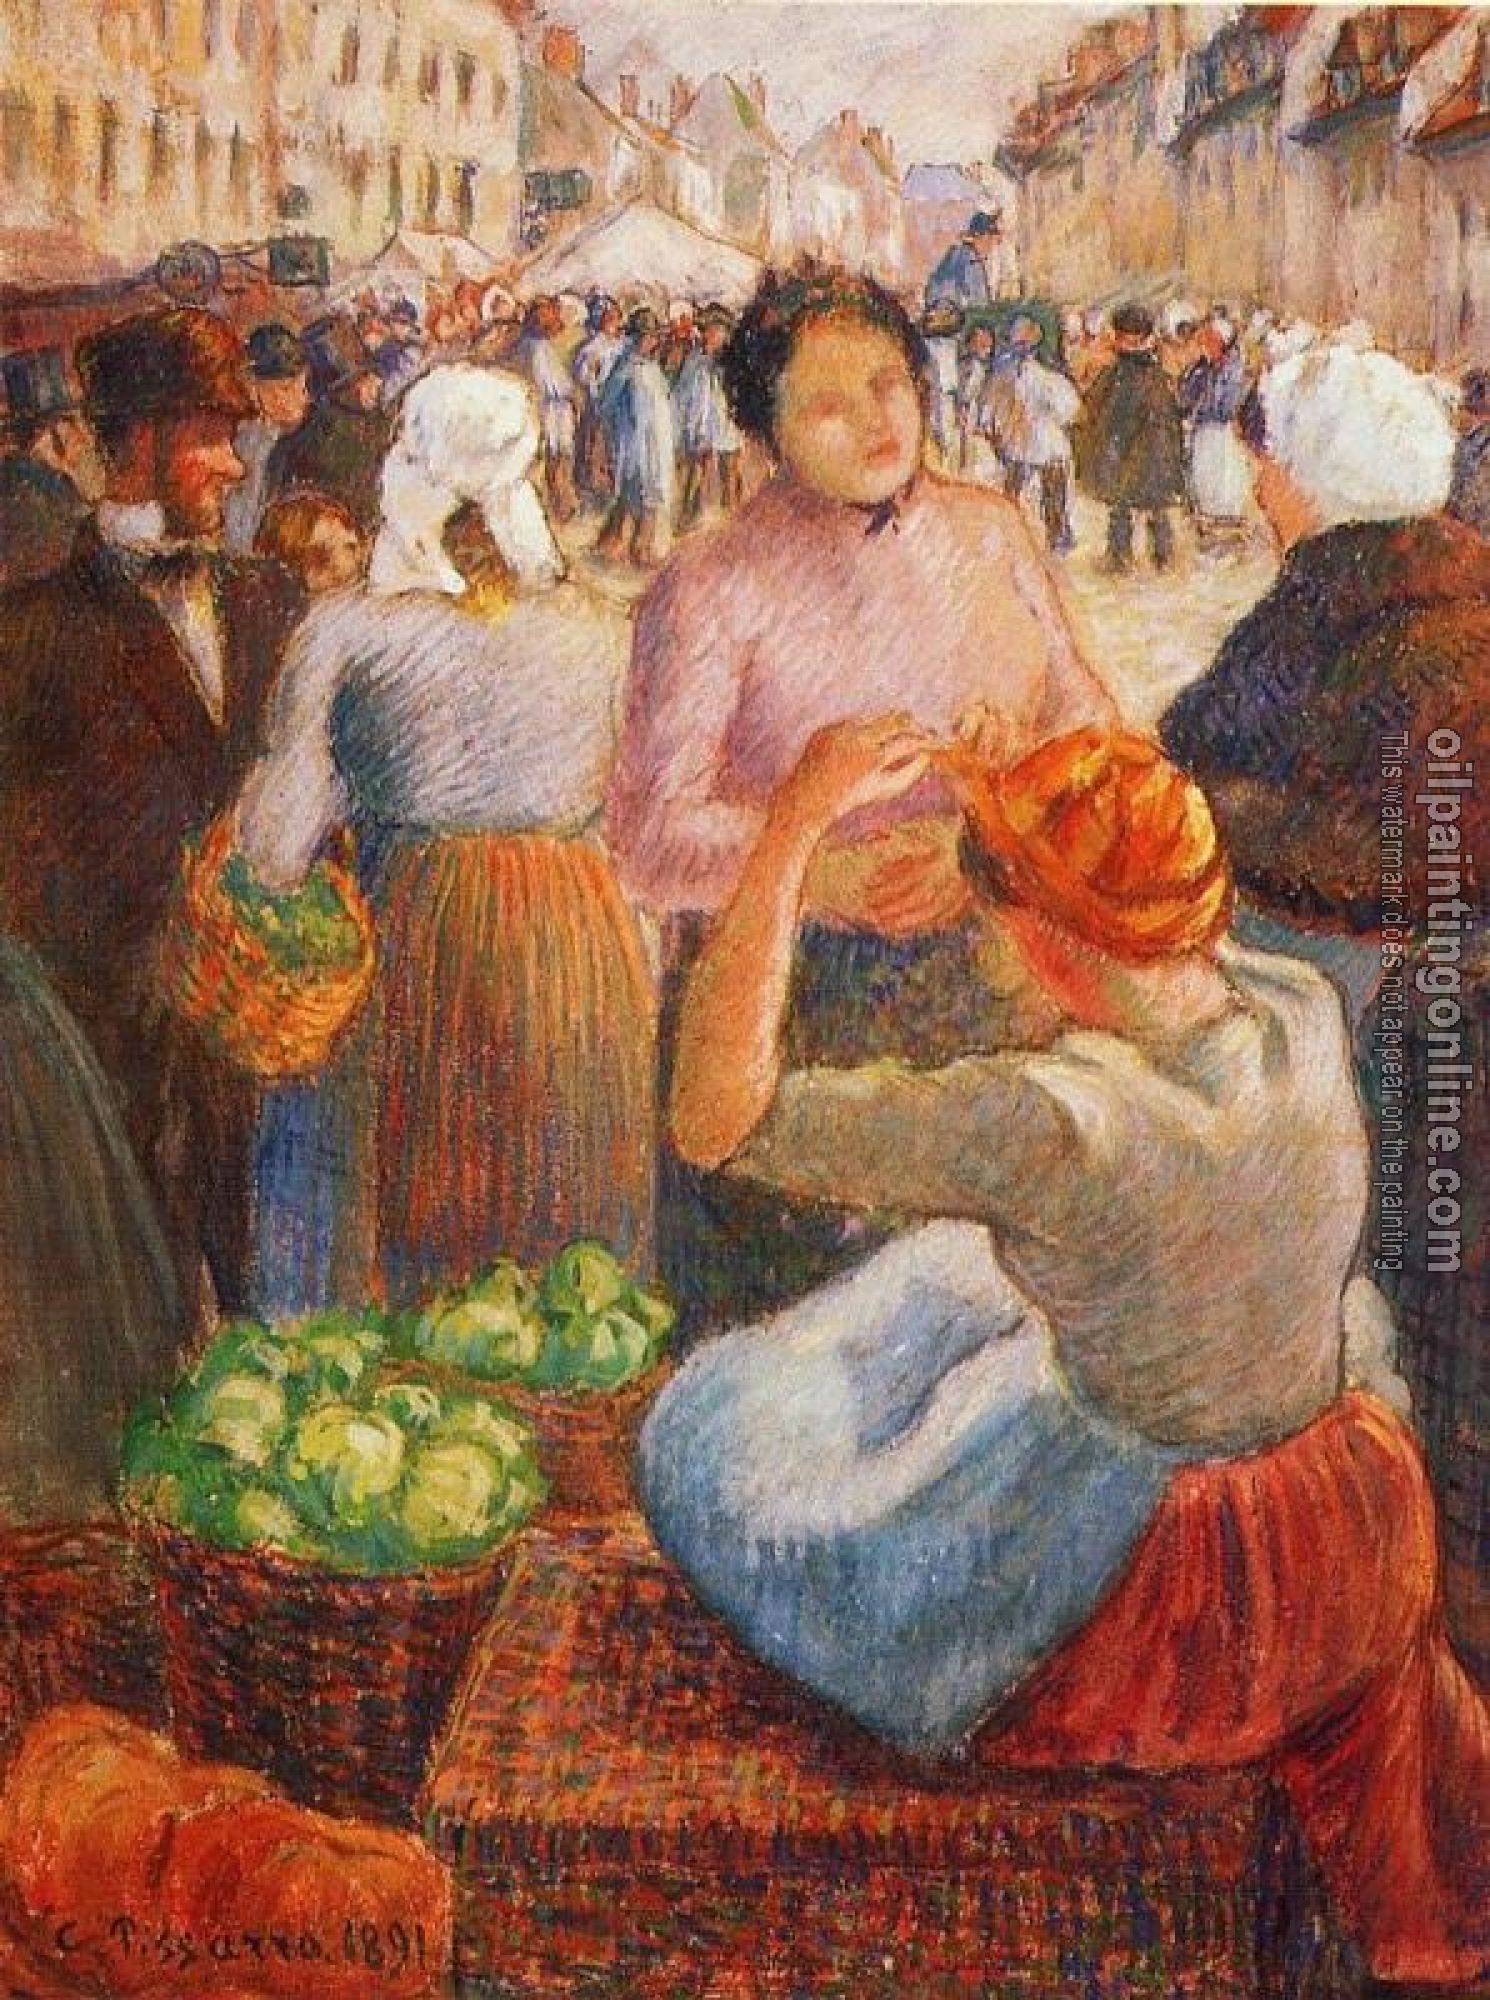 Pissarro, Camille - Marketplace, Gisors